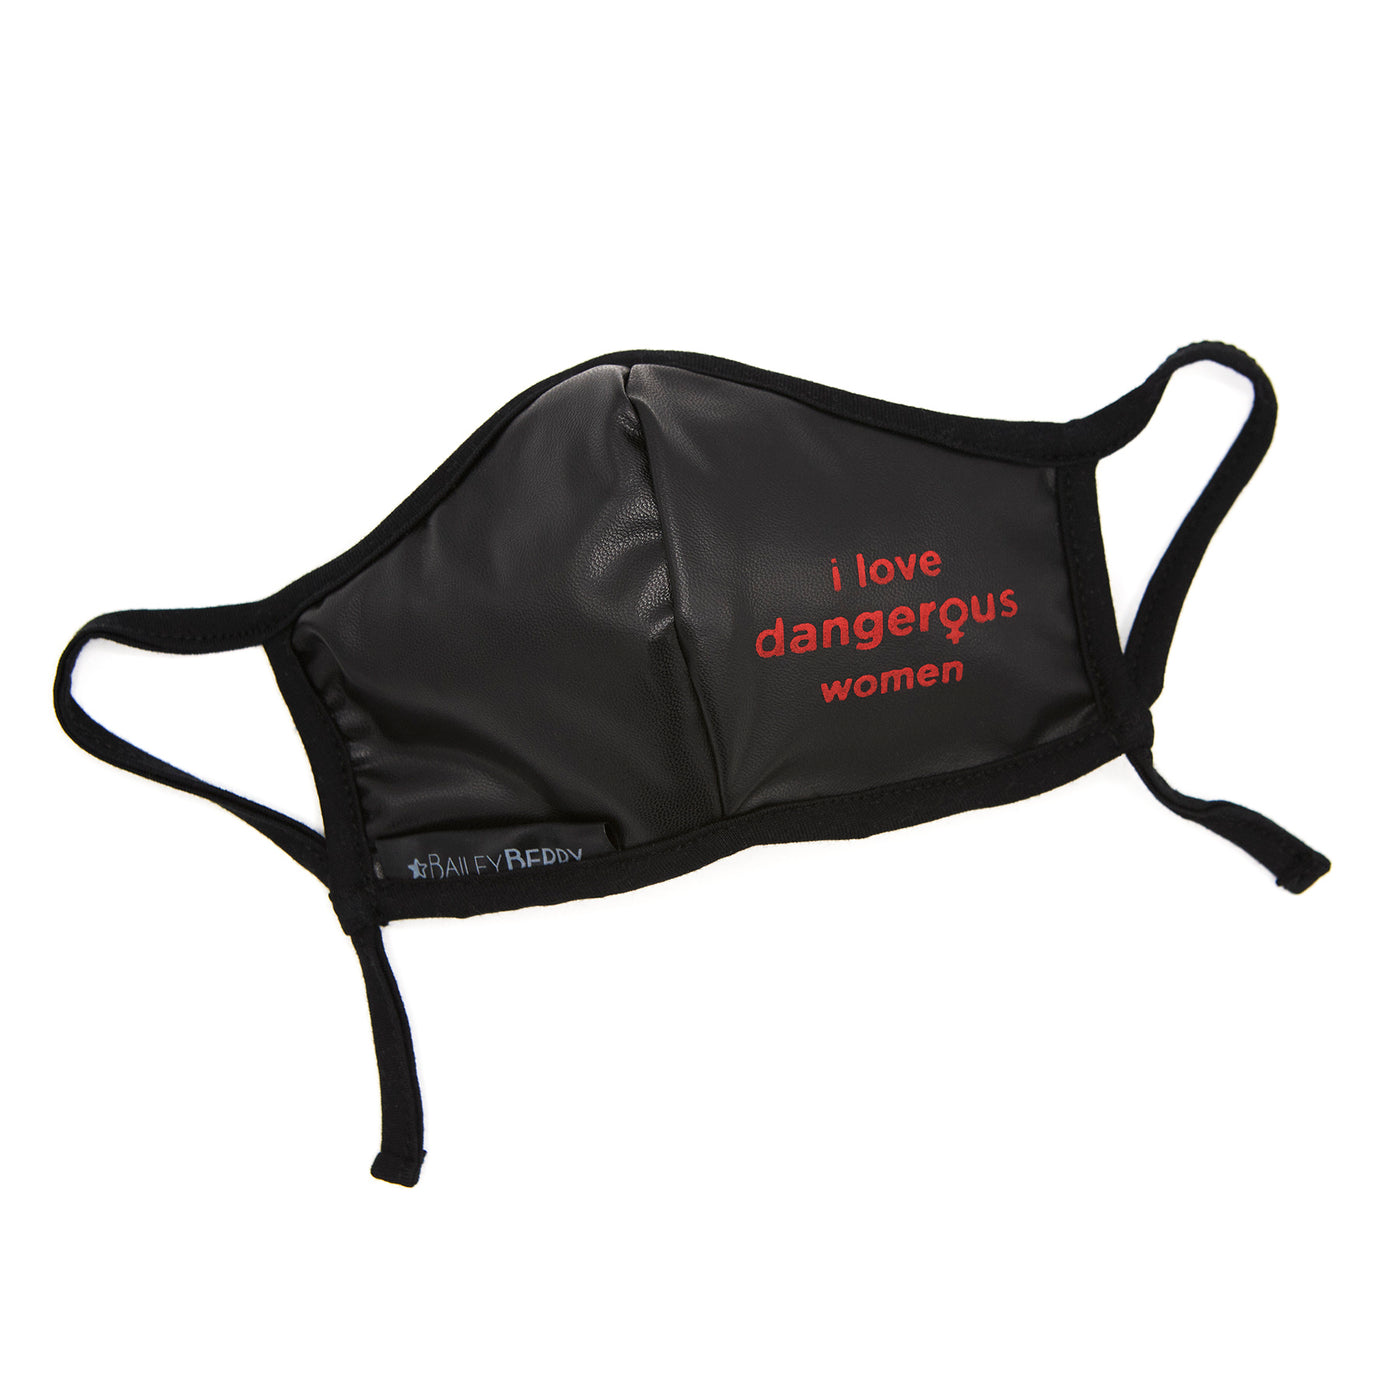 "I Love Dangerous Women" Black Vegan Leather Adult Face Mask with Adjustable Straps and Filter Pocket